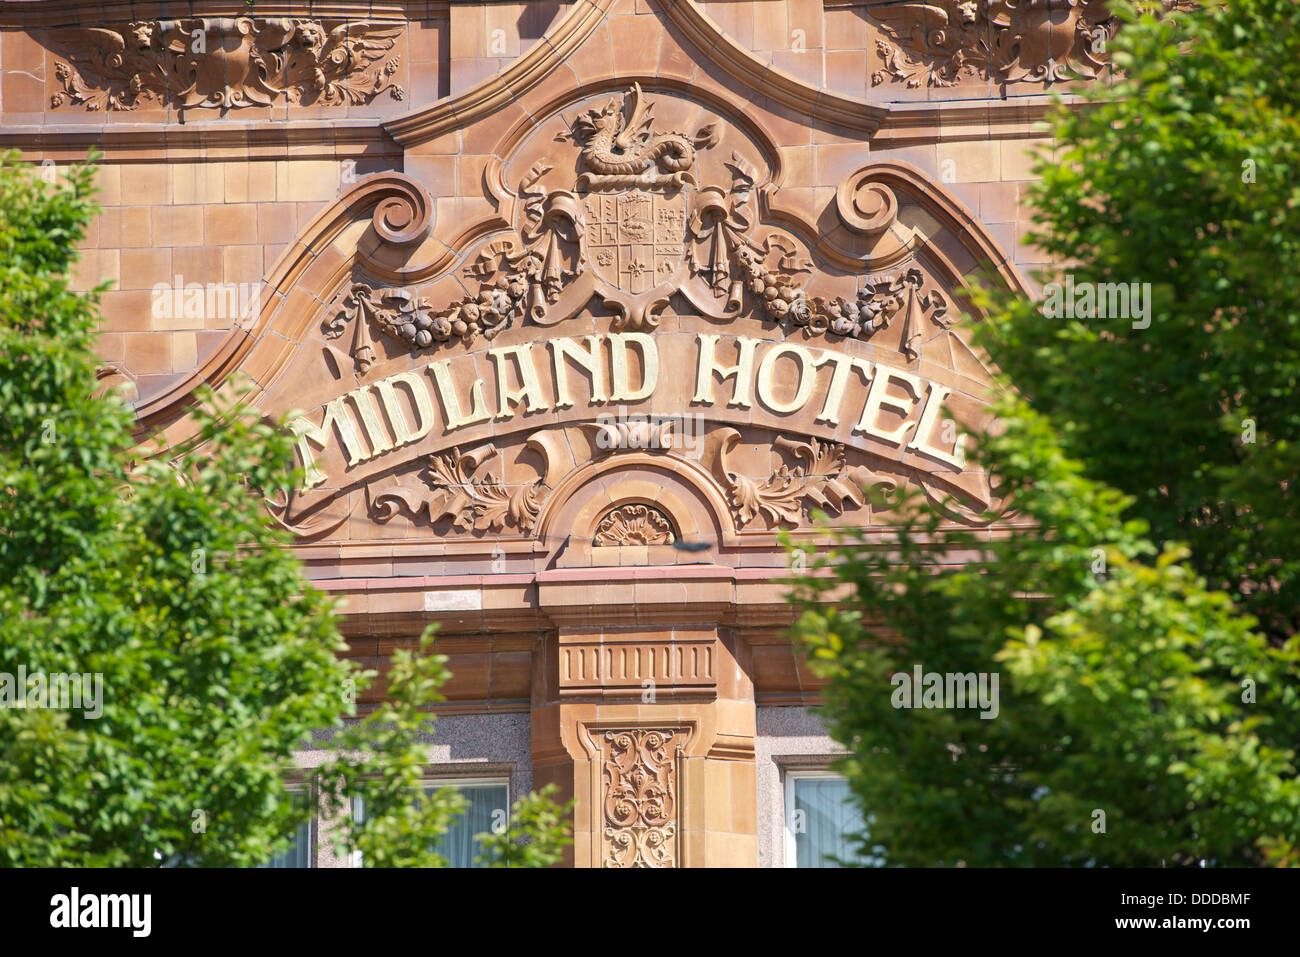 Midland Hotel Manchester Foto de stock